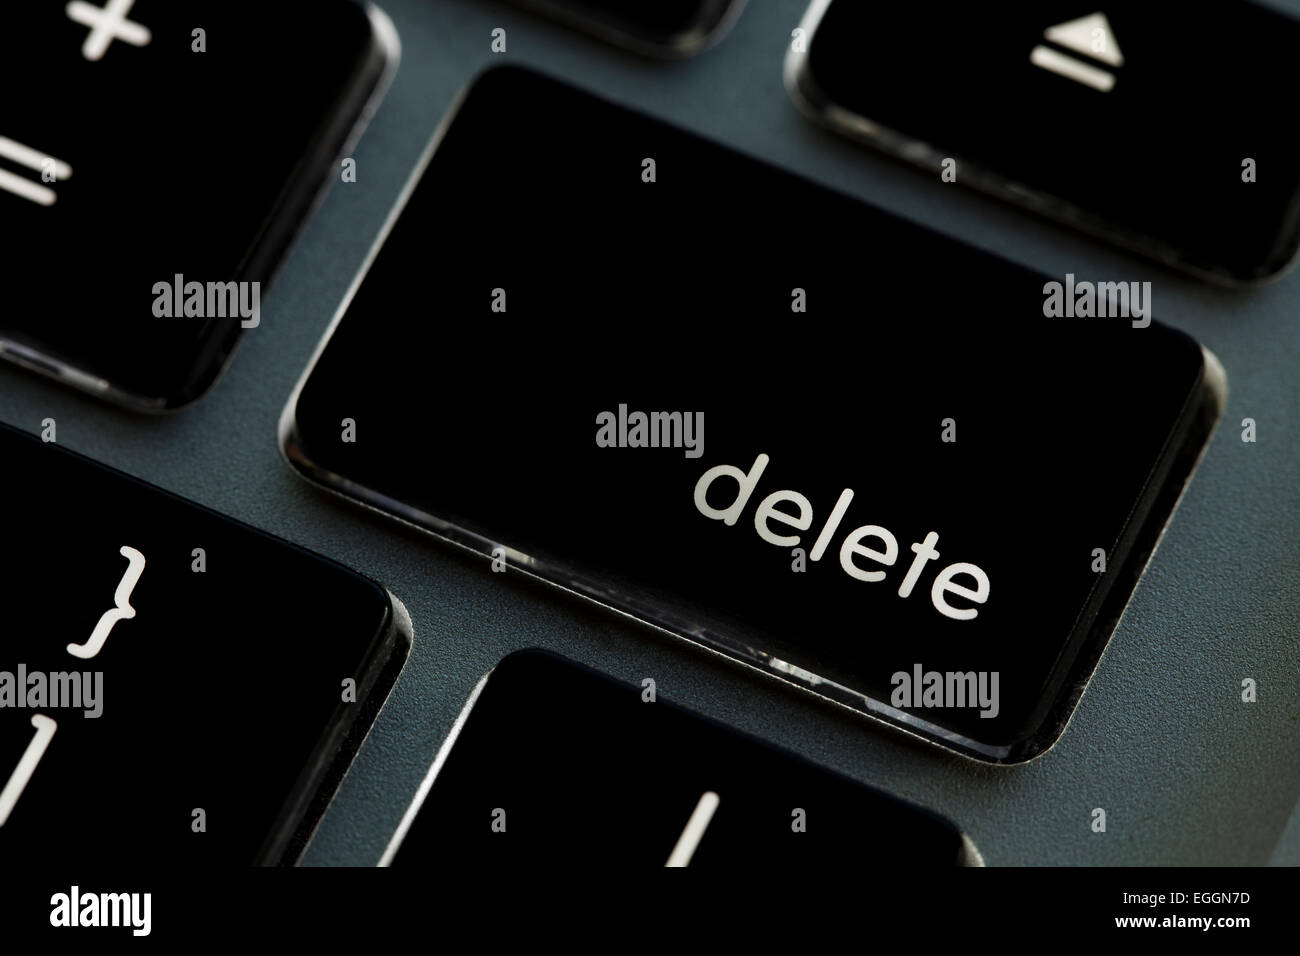 Illuminated Apple Macbook Pro keyboard delete key - USA Stock Photo